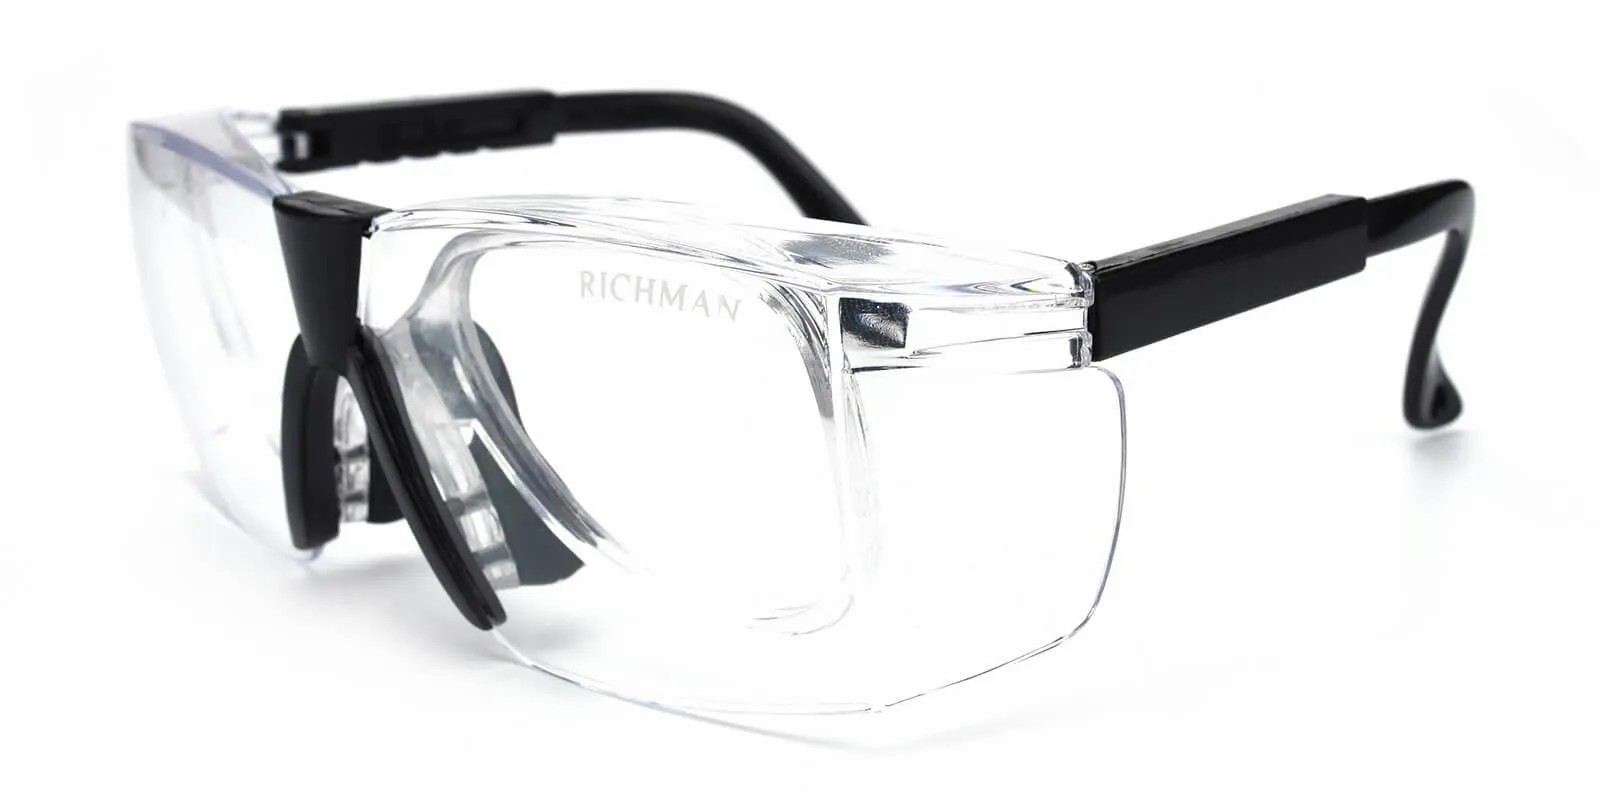 Vernebriller med styrke fra eo Protect - PlumBie - Klar